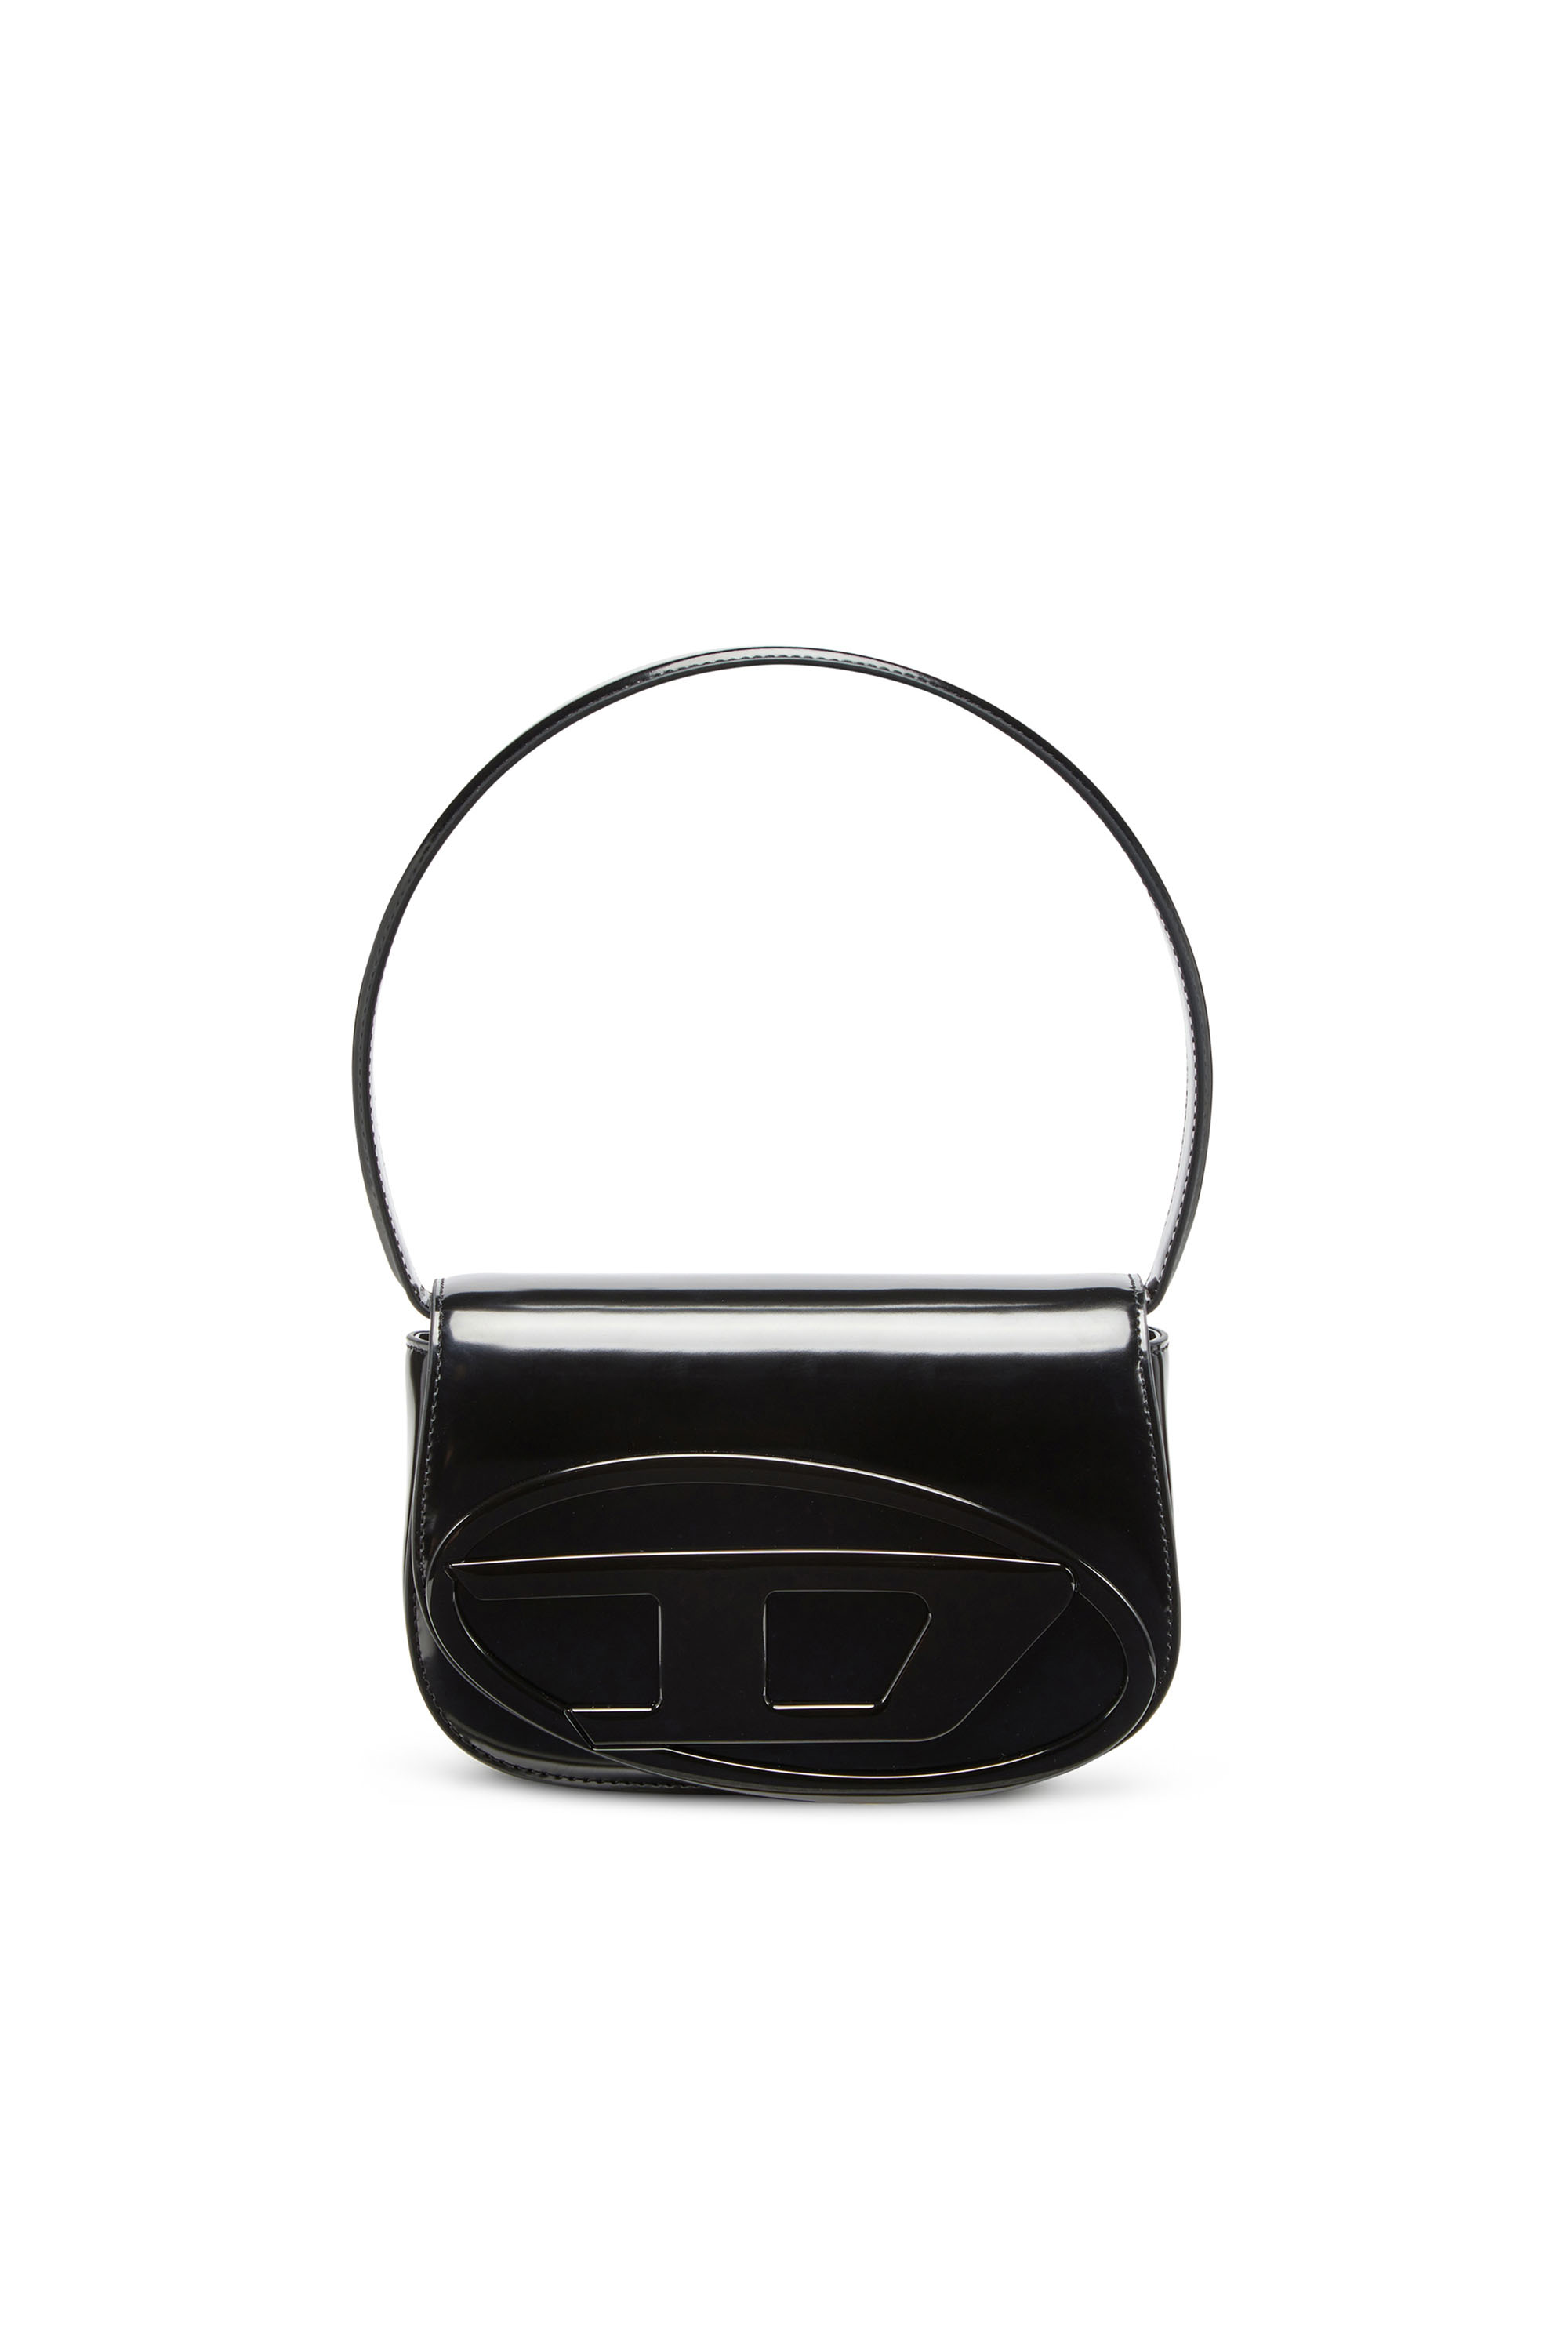 Diesel - 1DR - Iconic shoulder bag in mirrored leather - Shoulder Bags - Woman - Black